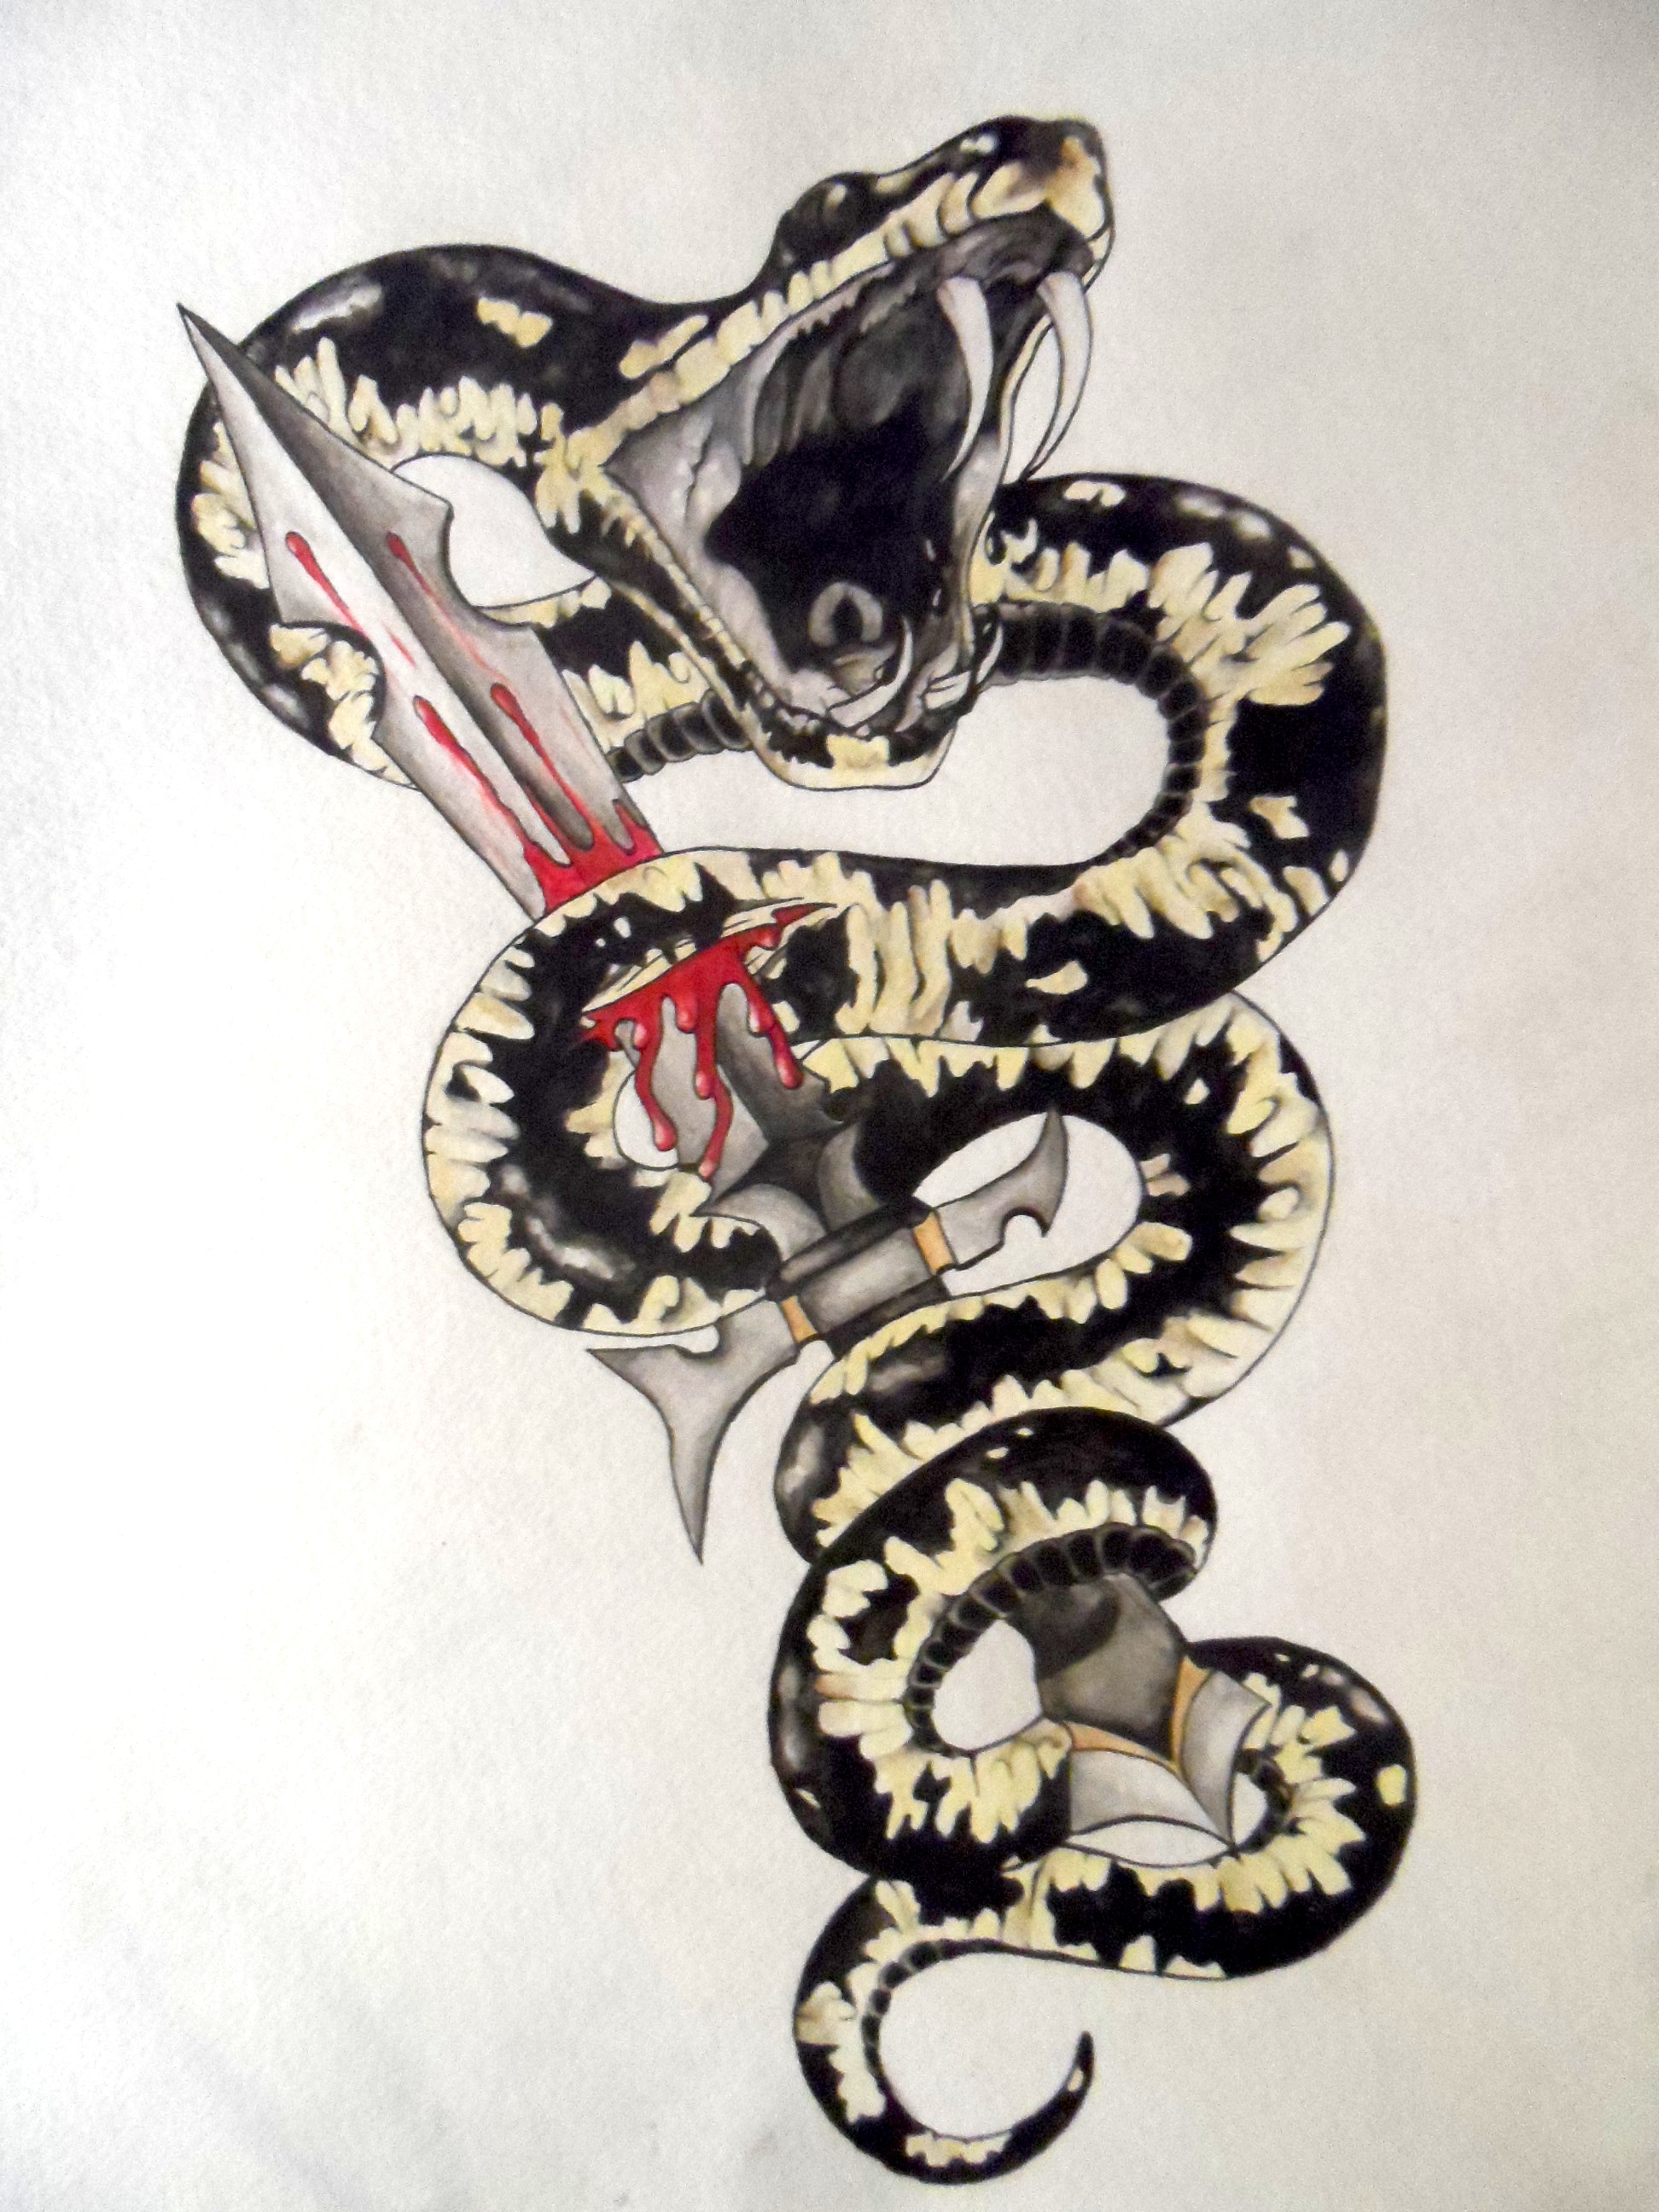 Snake tattoo design by Zorah777 on DeviantArt